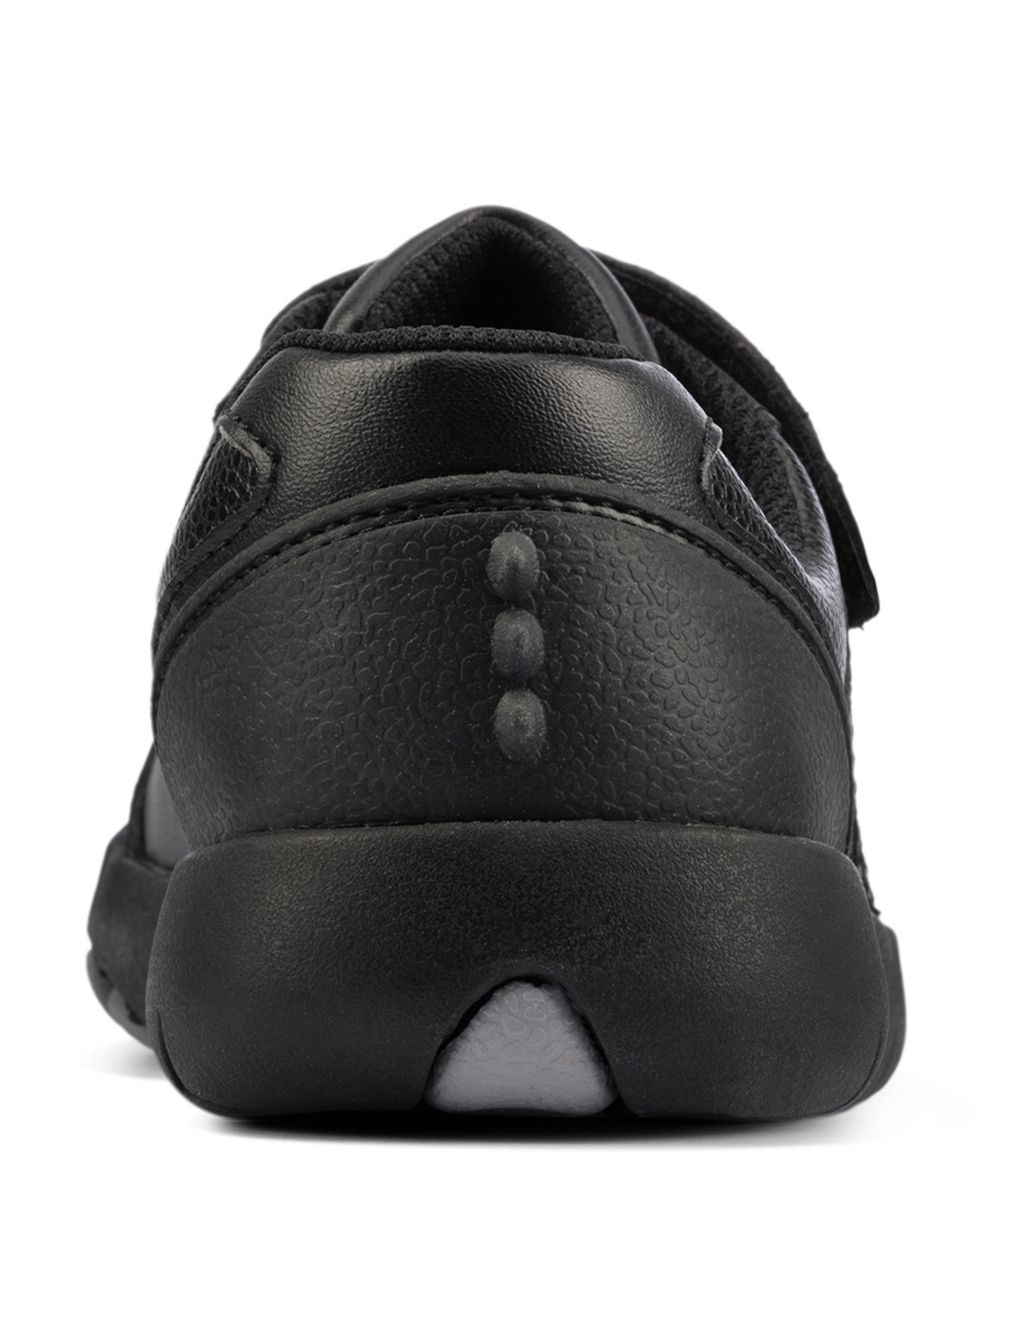 Kids' Leather Riptape School Shoes (Kid size 10-2.5) image 2